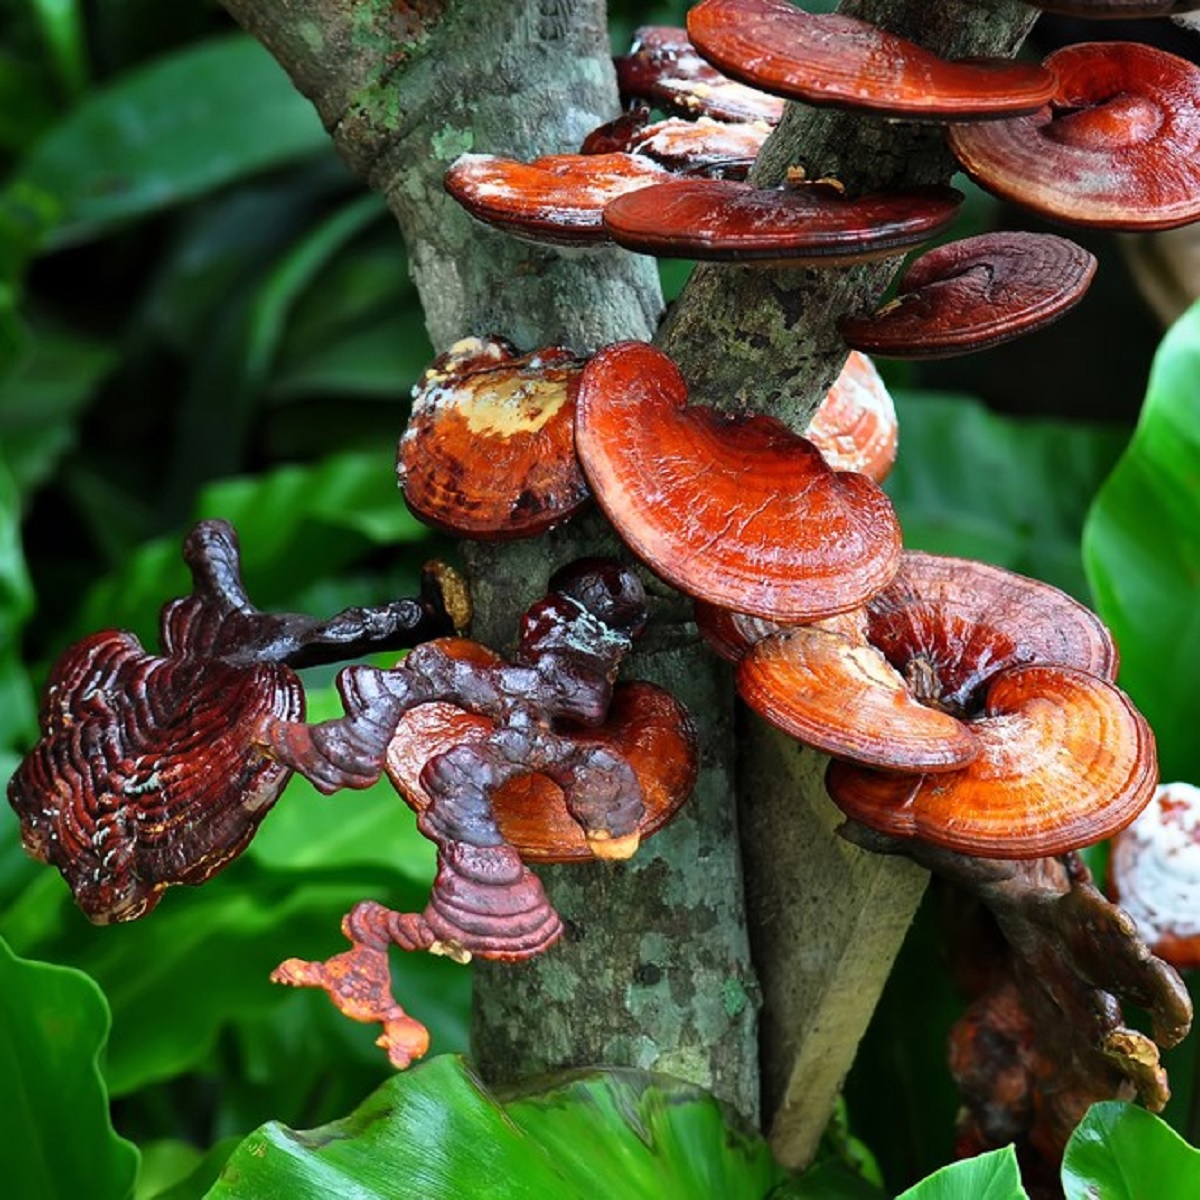 RED REISHI MUSHROOM (GANODERMA LUCIDUM, LINGZHI) – 13 Surprising Health Benefits of Reishi Mushroom Based on Science